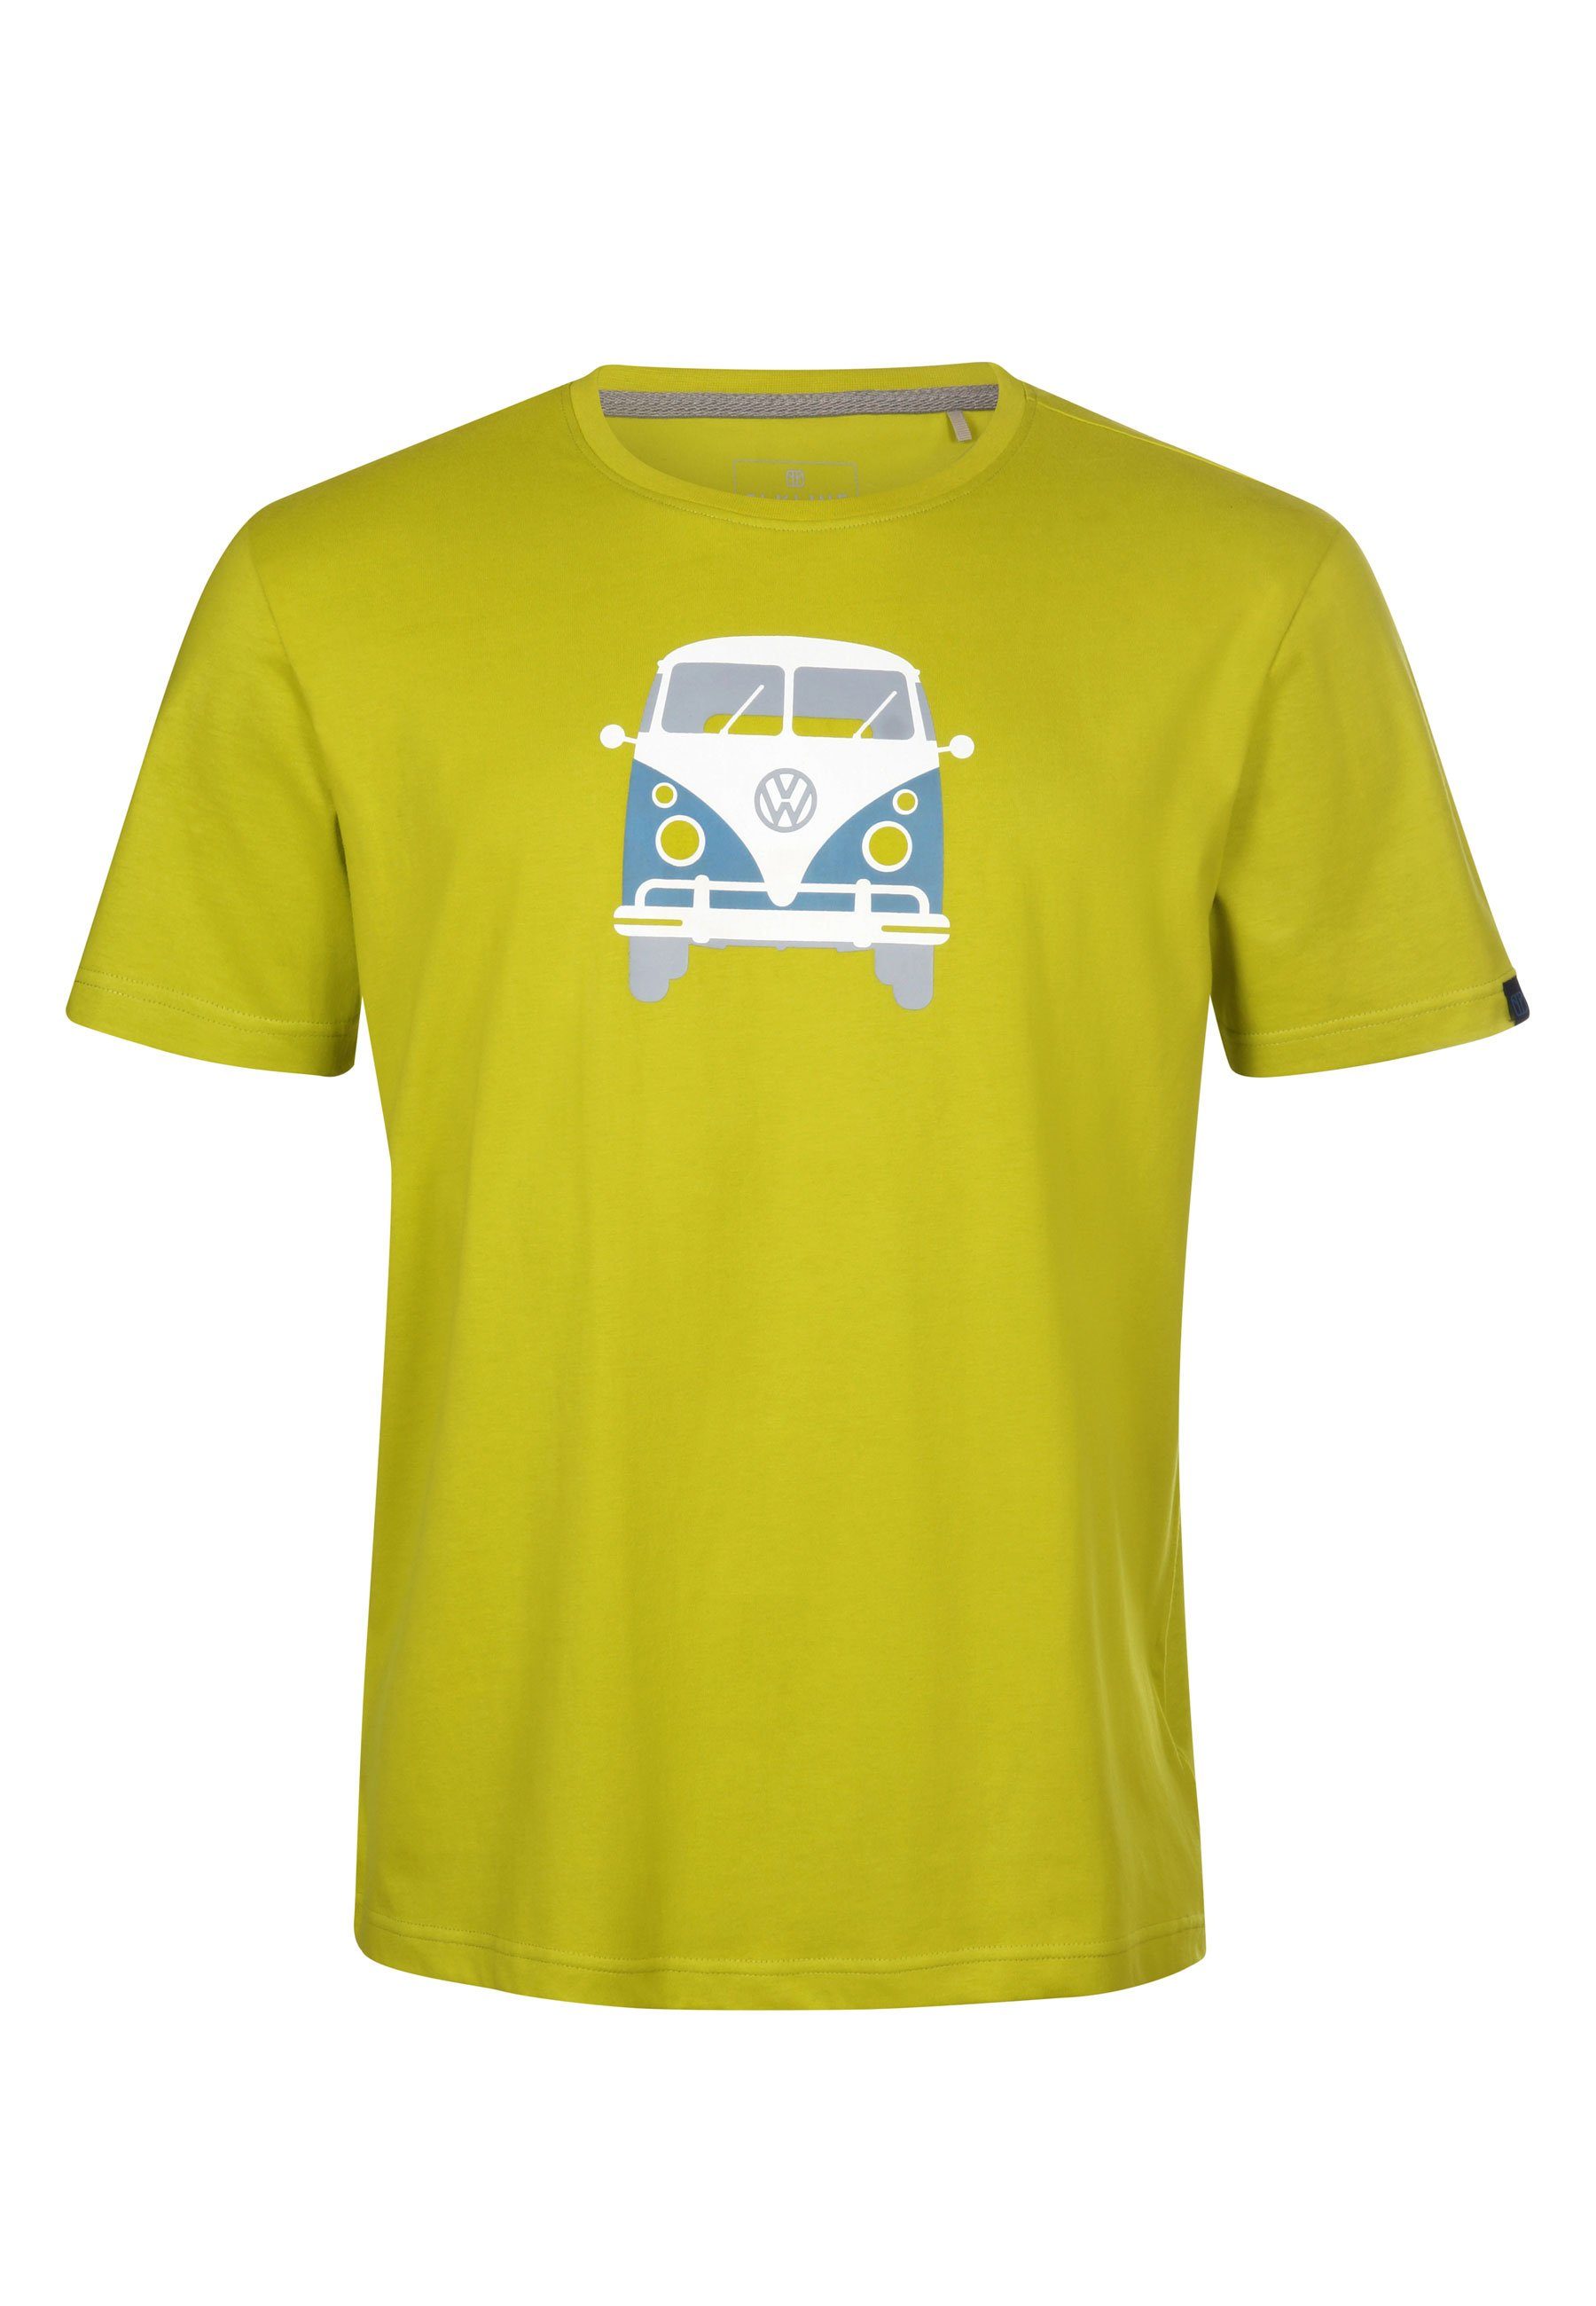 Elkline T-Shirt Methusalem lizenzierter VW Bulli Brust Rücken Print citronelle